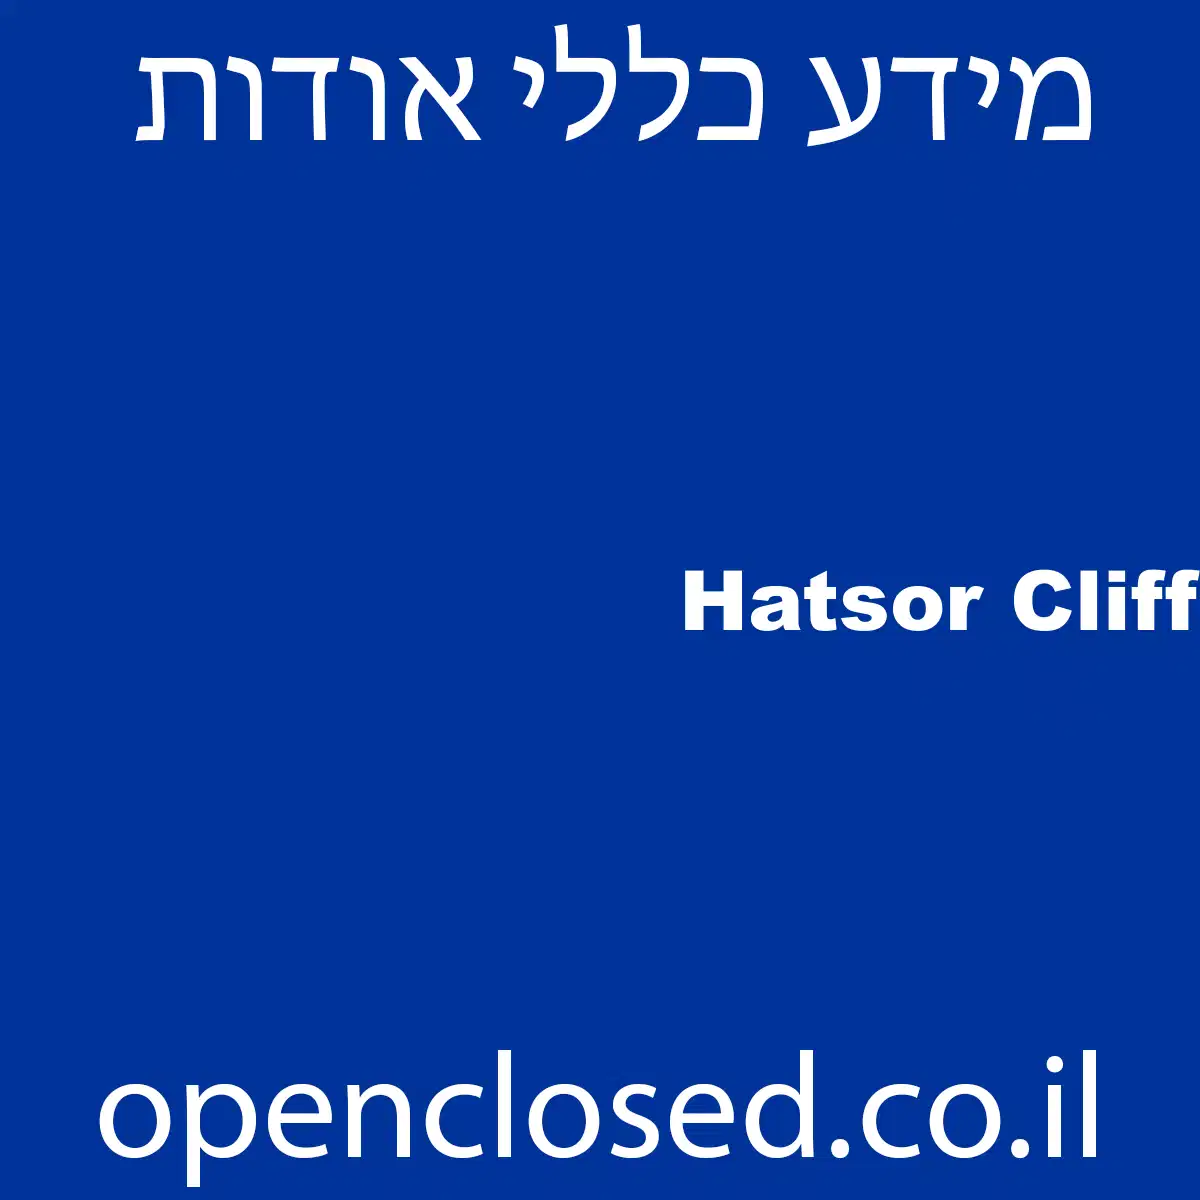 Hatsor Cliff